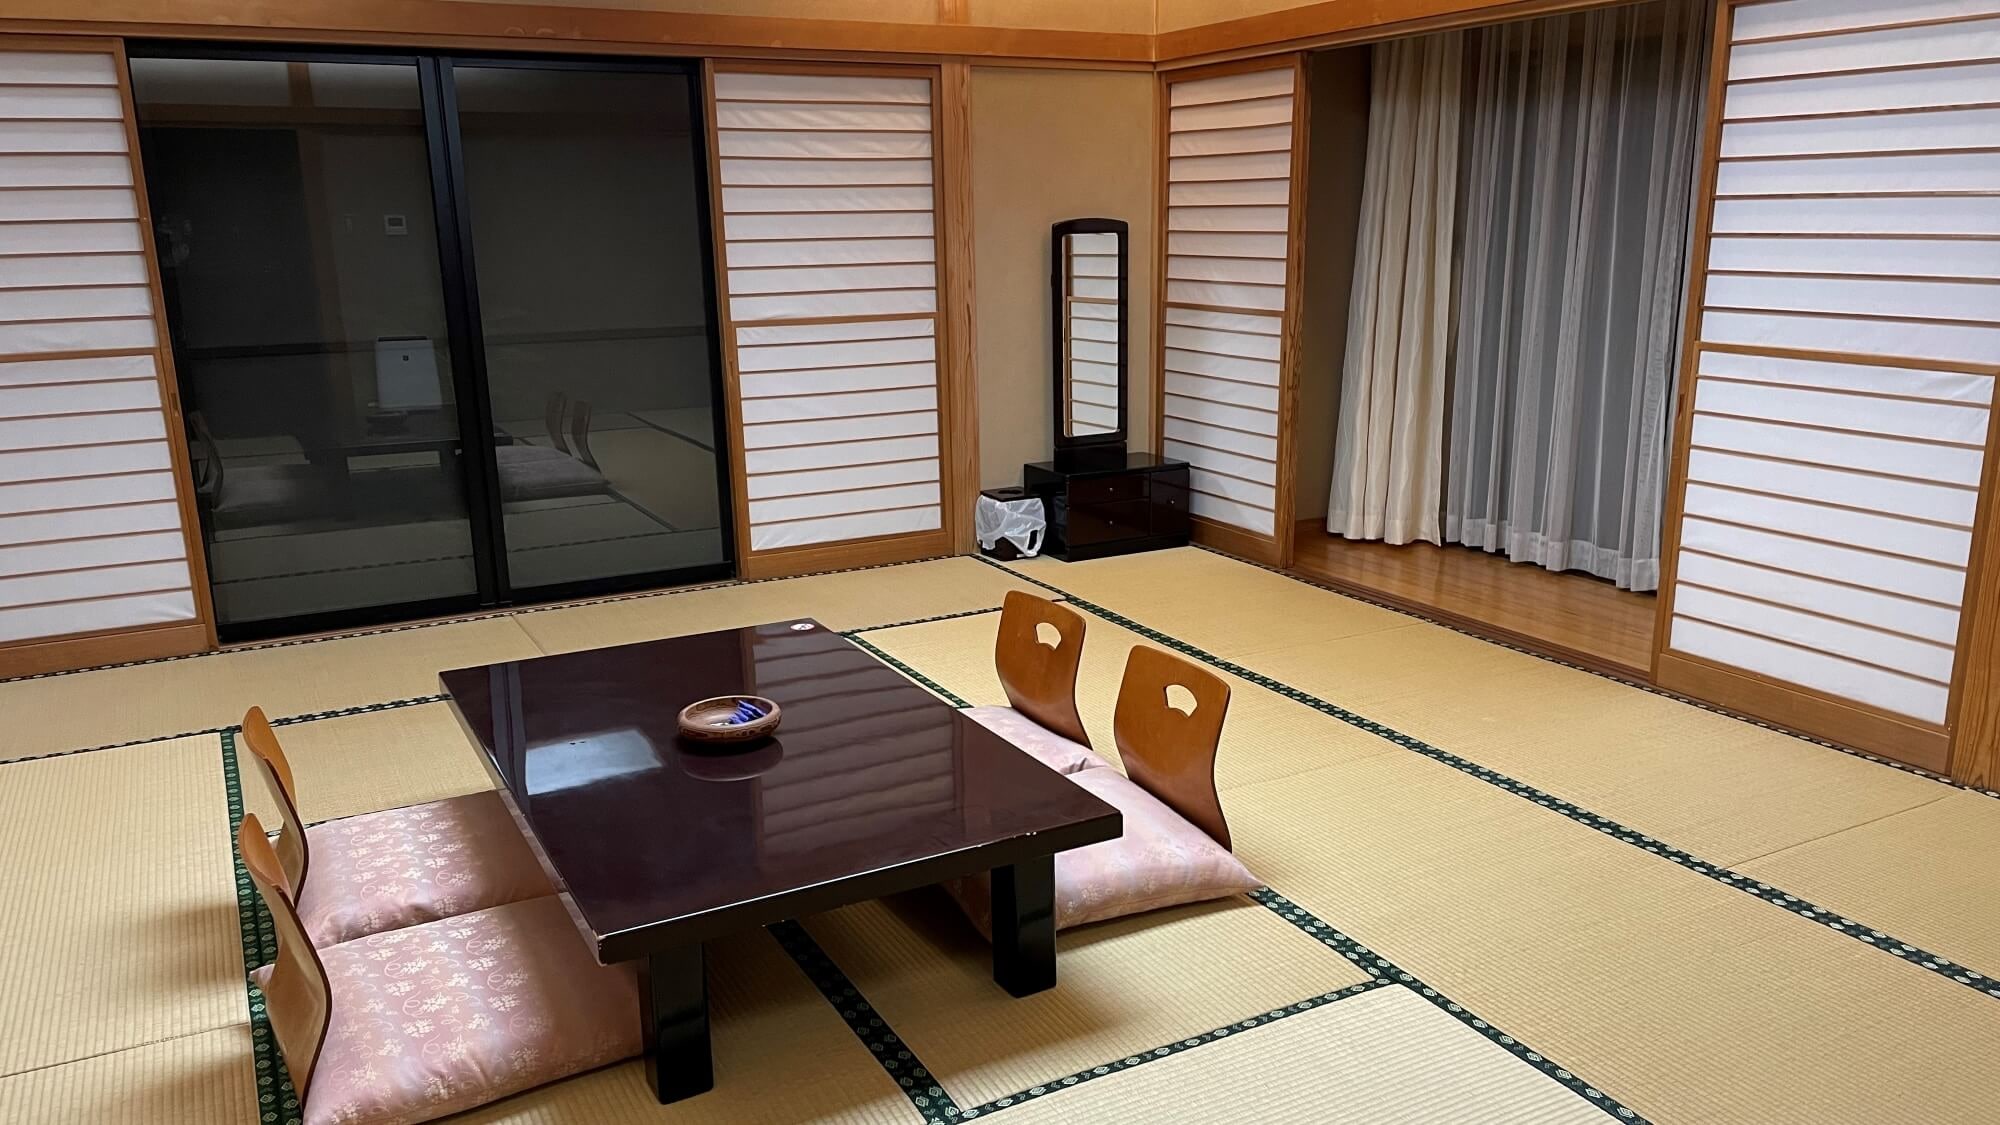 ■ Japanese-style room 15 tatami mats